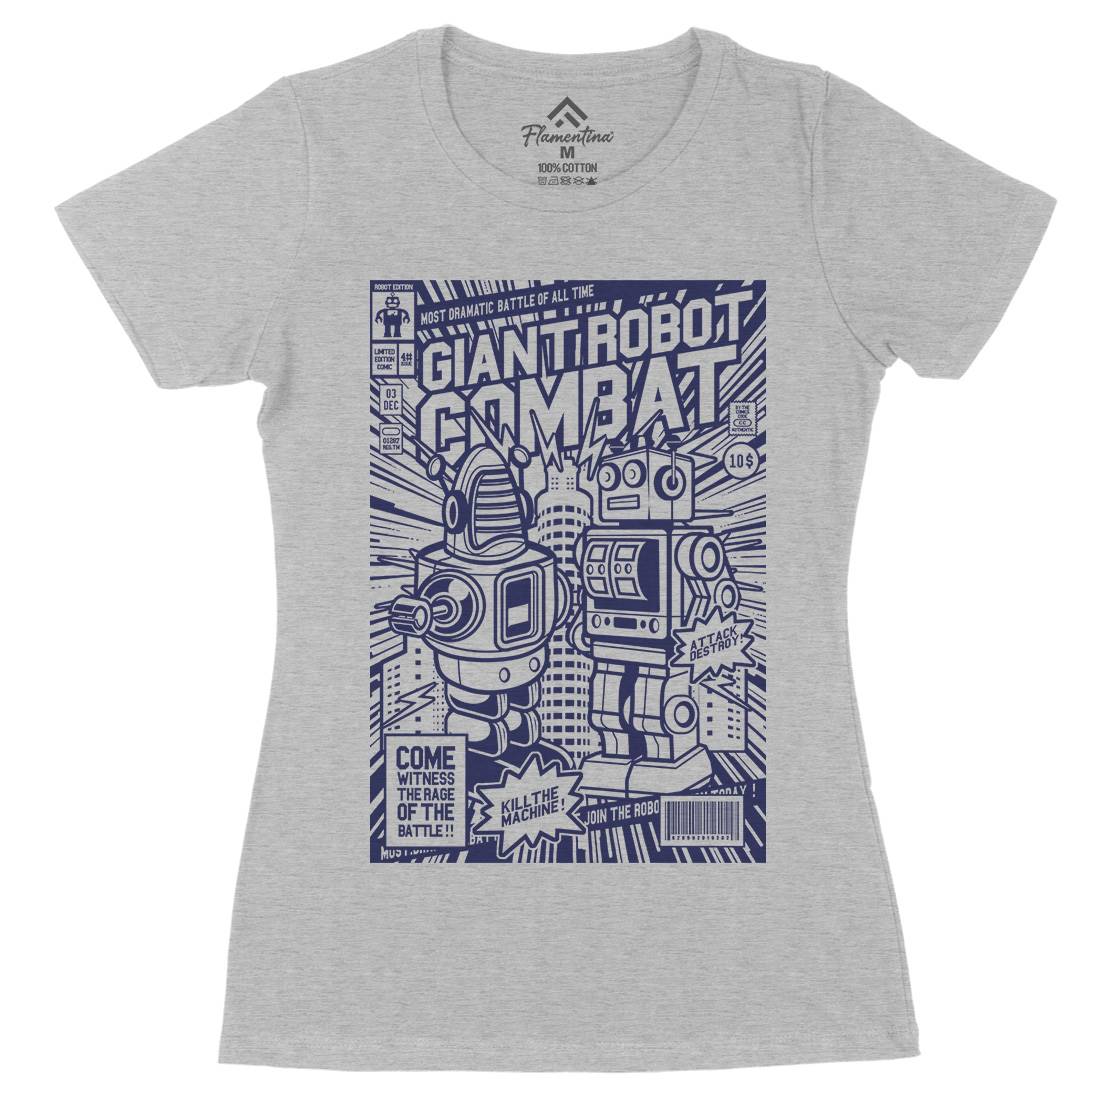 Giant Robot Combat Womens Organic Crew Neck T-Shirt Space A233